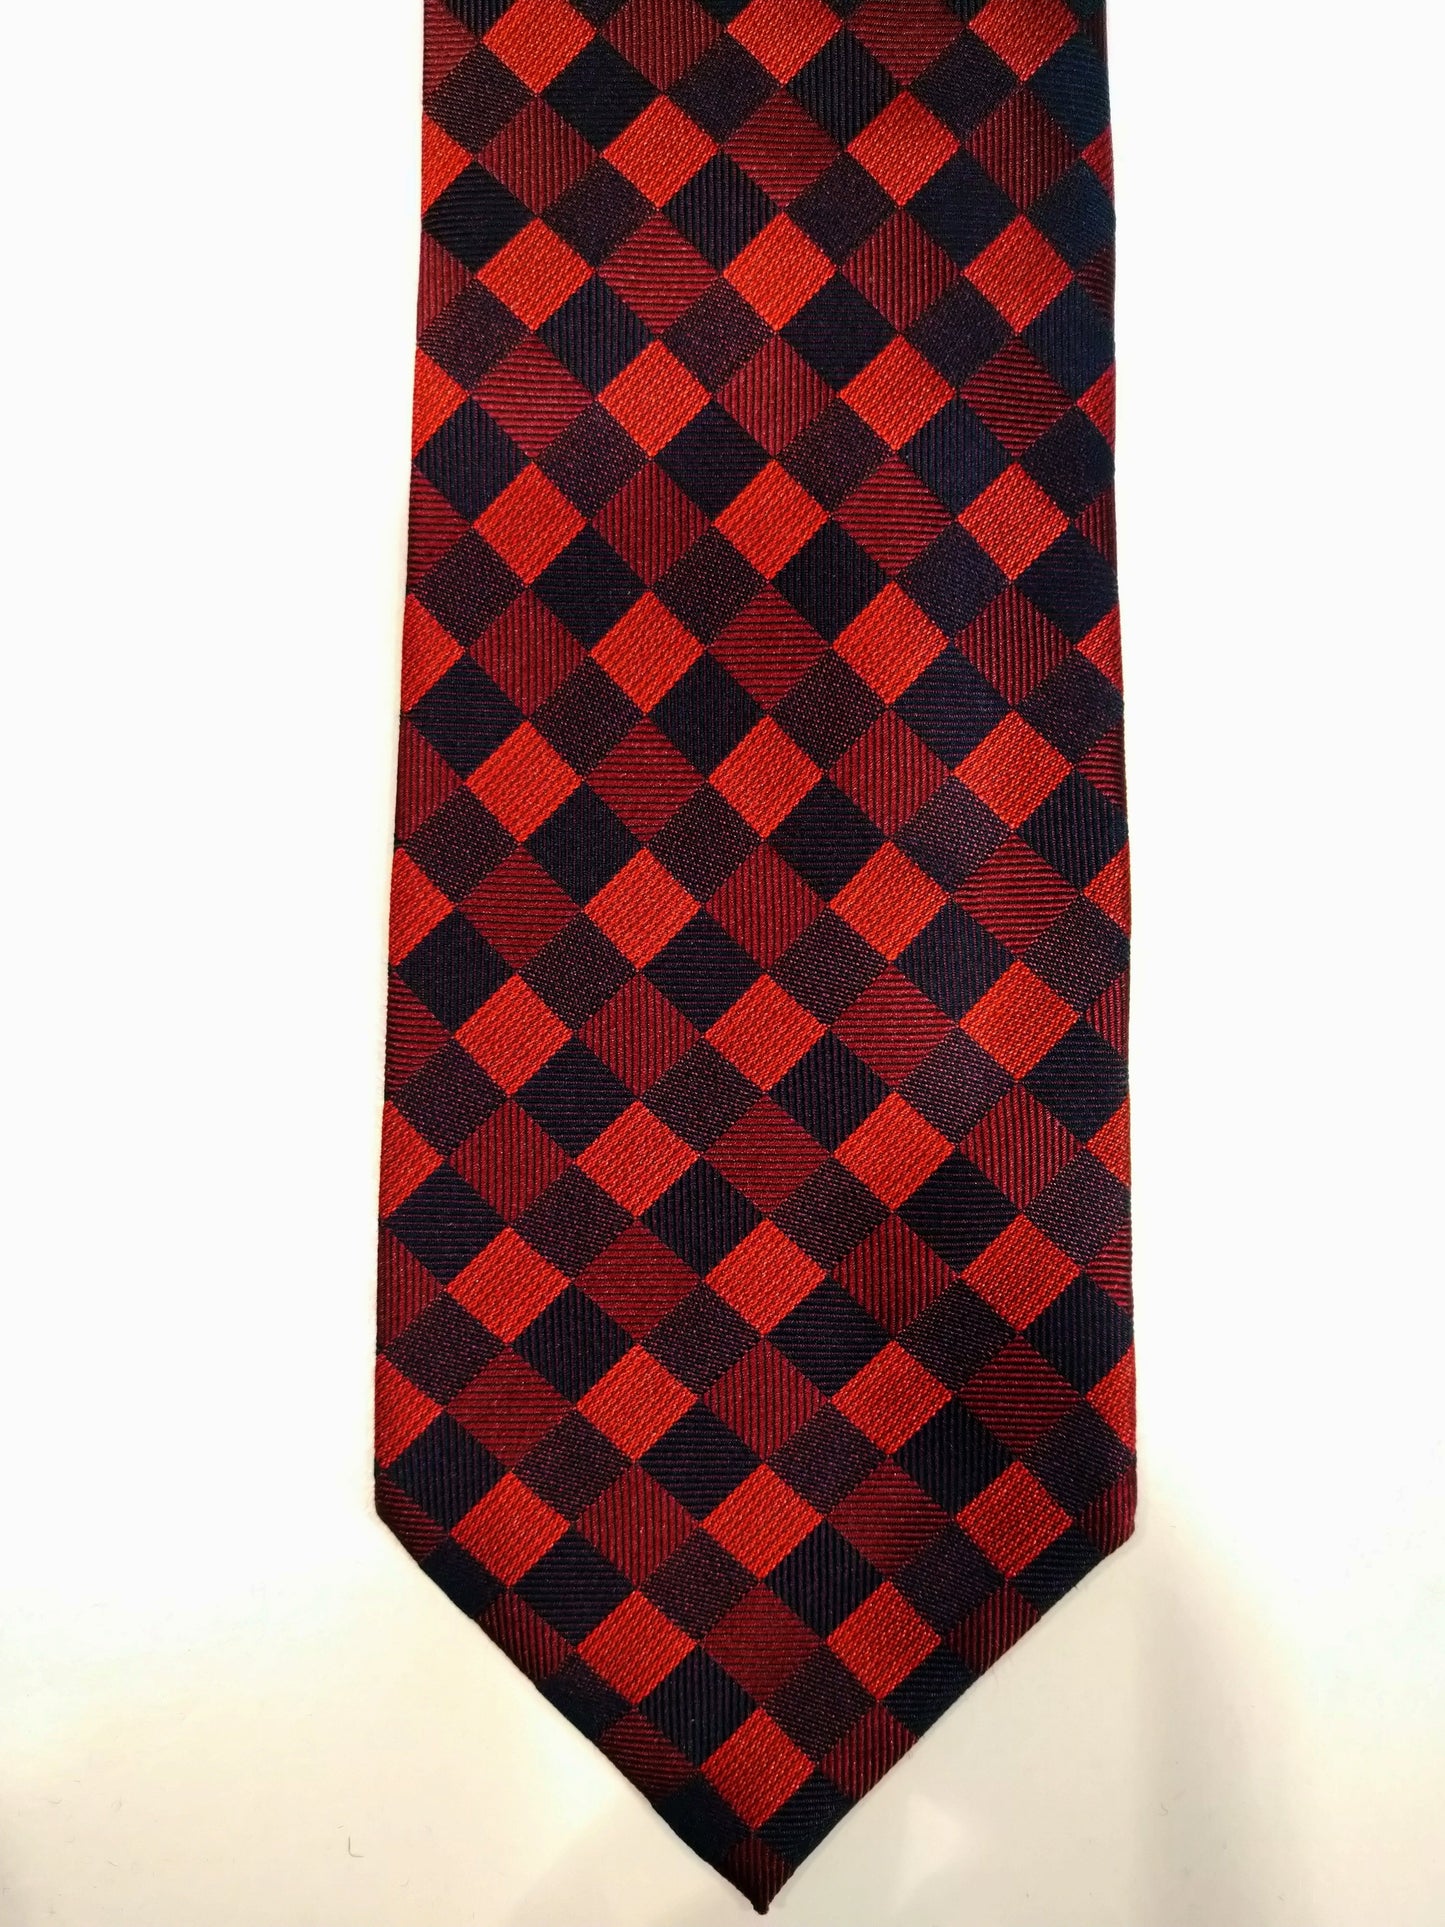 Liv silk tie. Red black checkered motif.